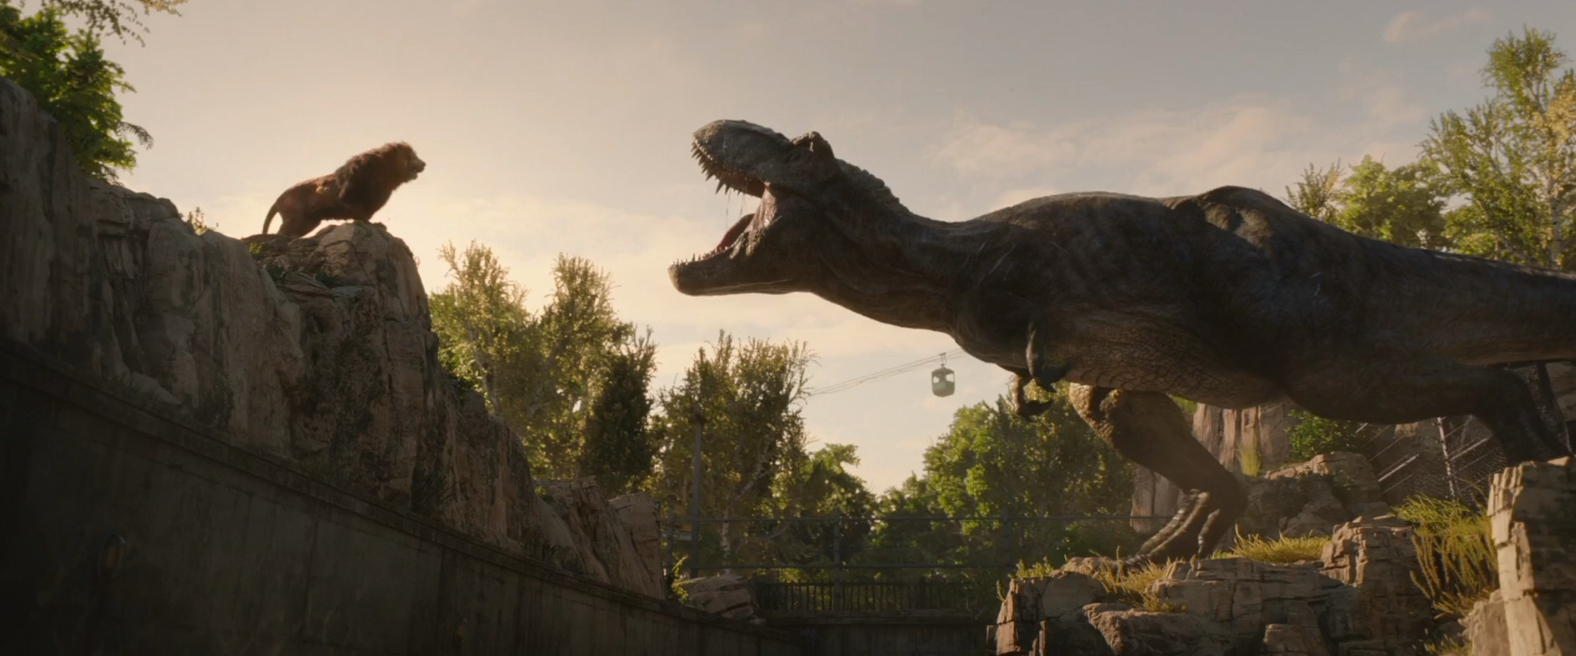 Jurassic World: Fallen Kingdom Movie Review